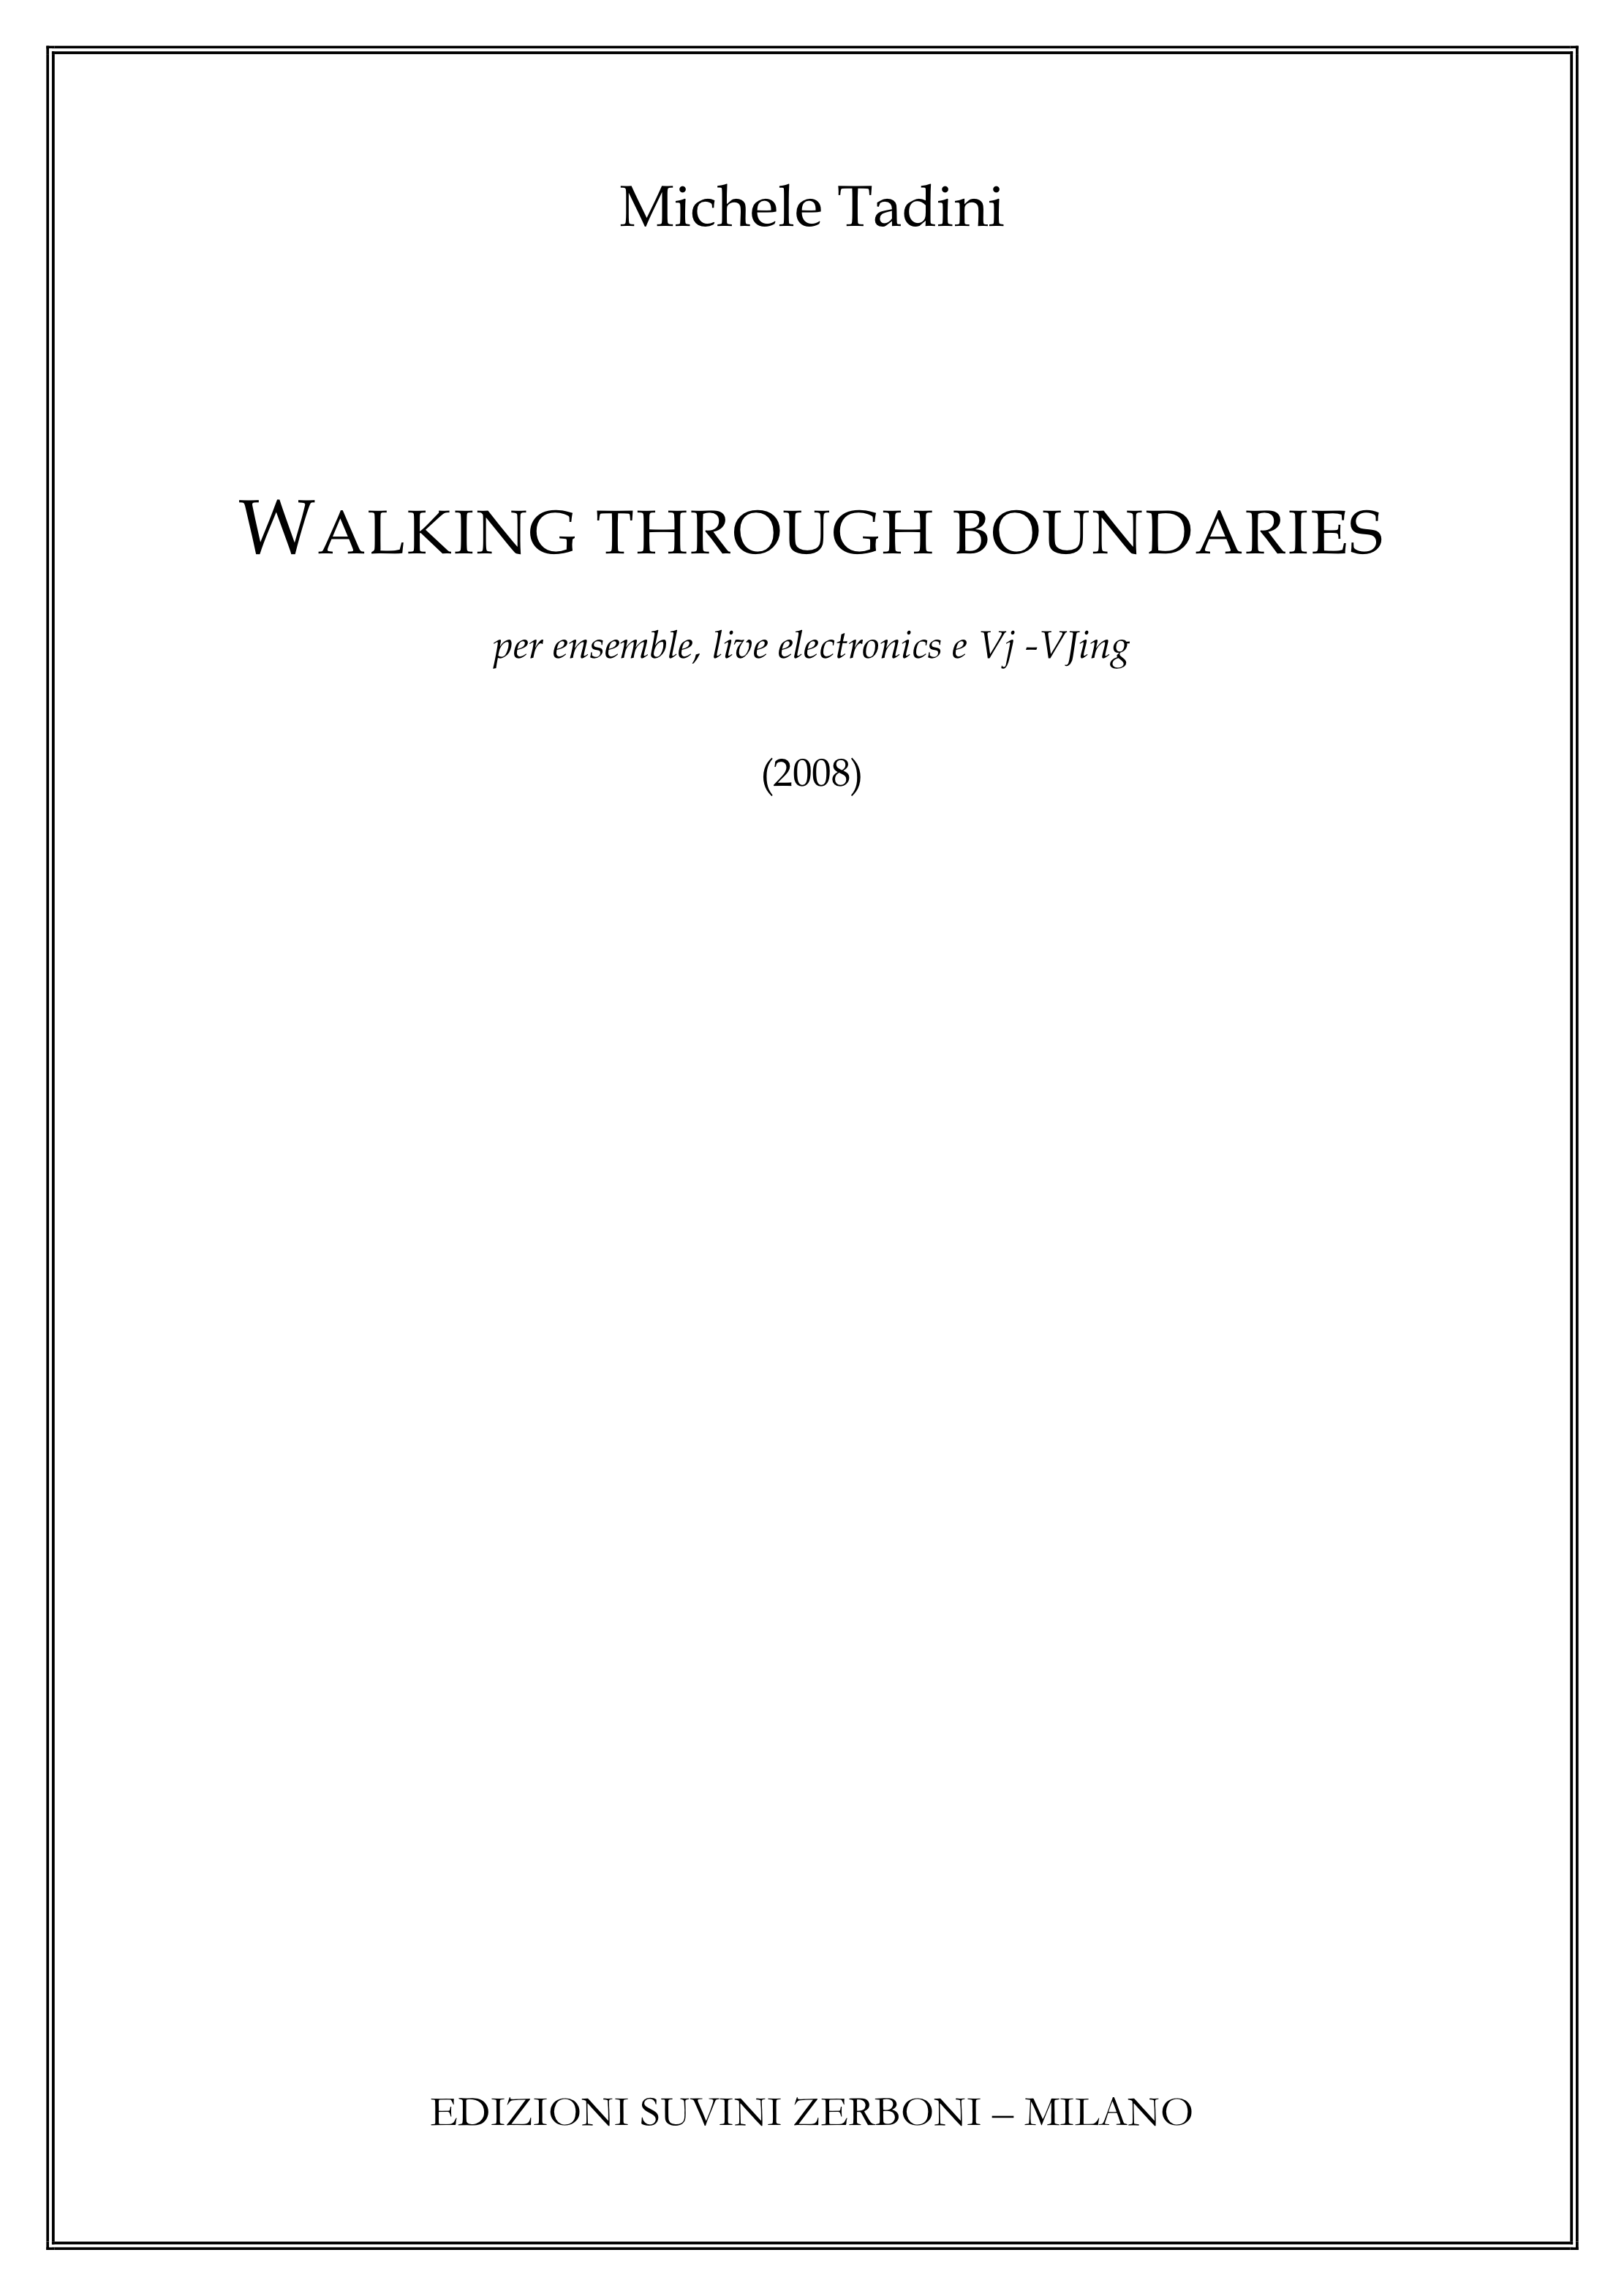 Walking through boundaries_Tadini 1